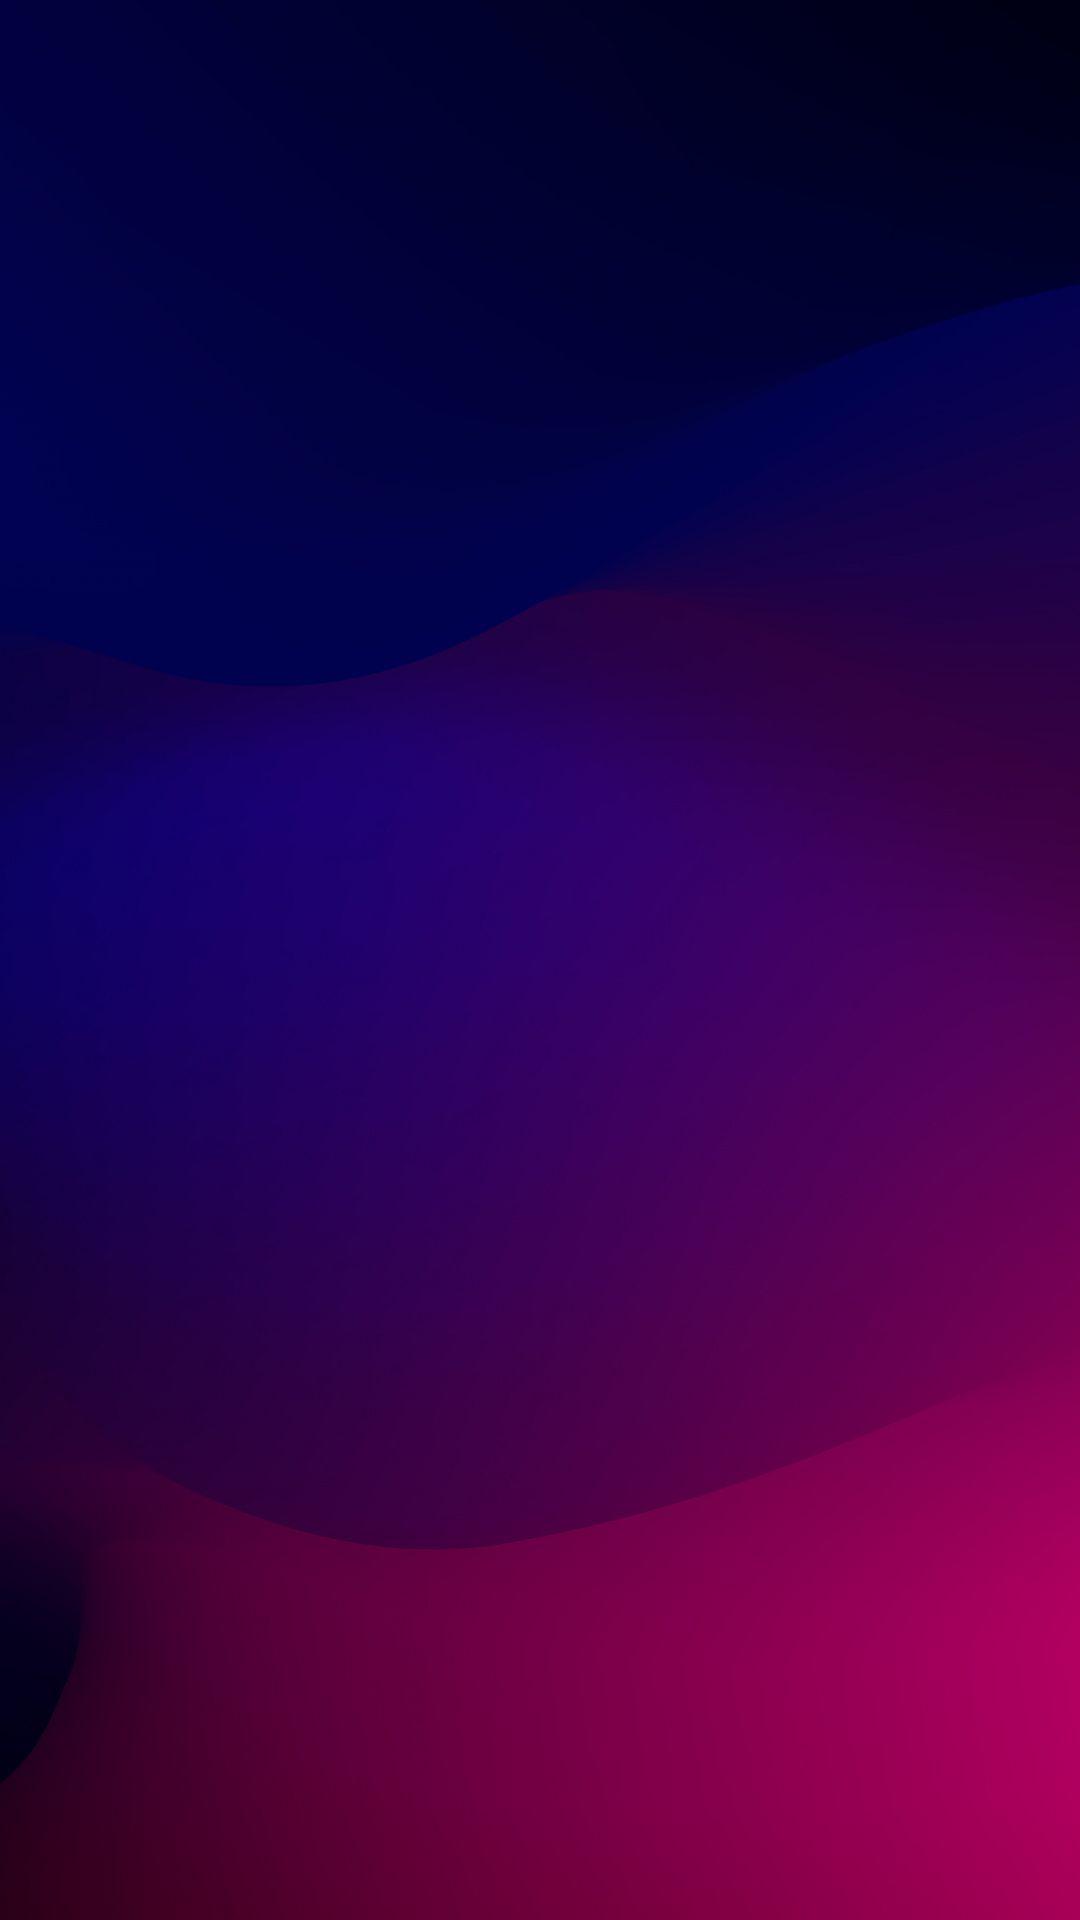 Dark, abstract, simple colors, blur, 1080x1920 wallpaper. Phone